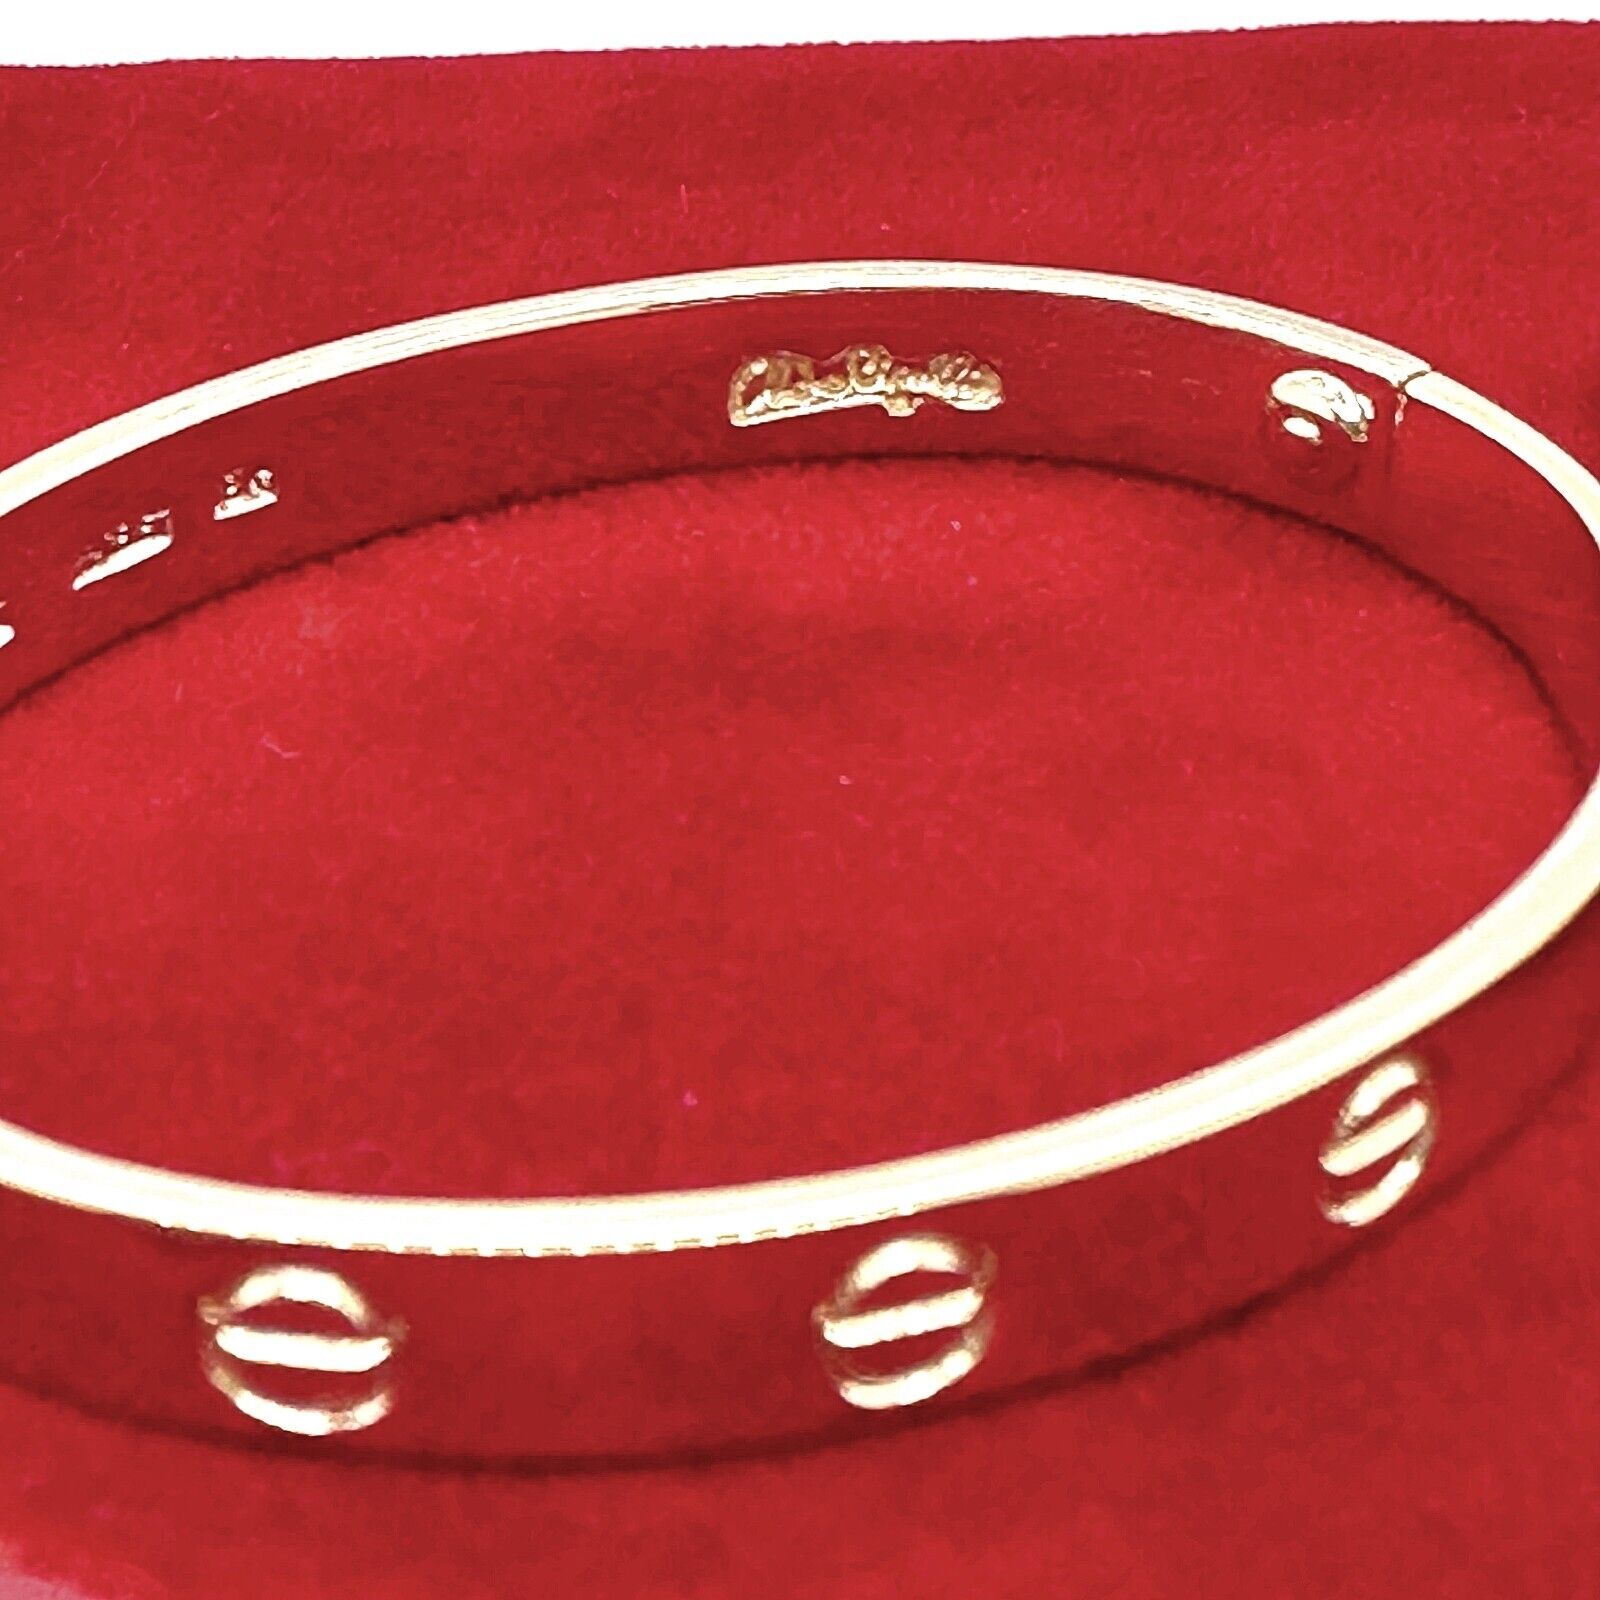 Aldo Bracelets sale - discounted price | FASHIOLA INDIA